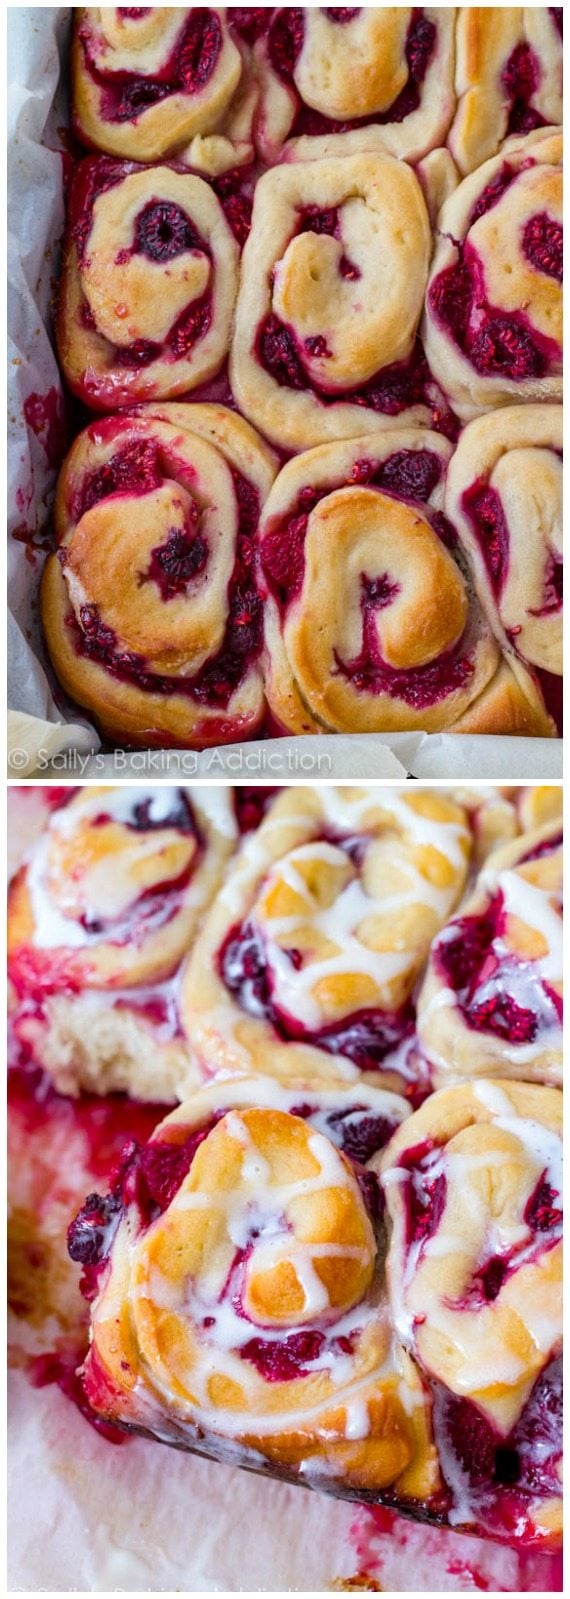 2 images of raspberry sweet rolls